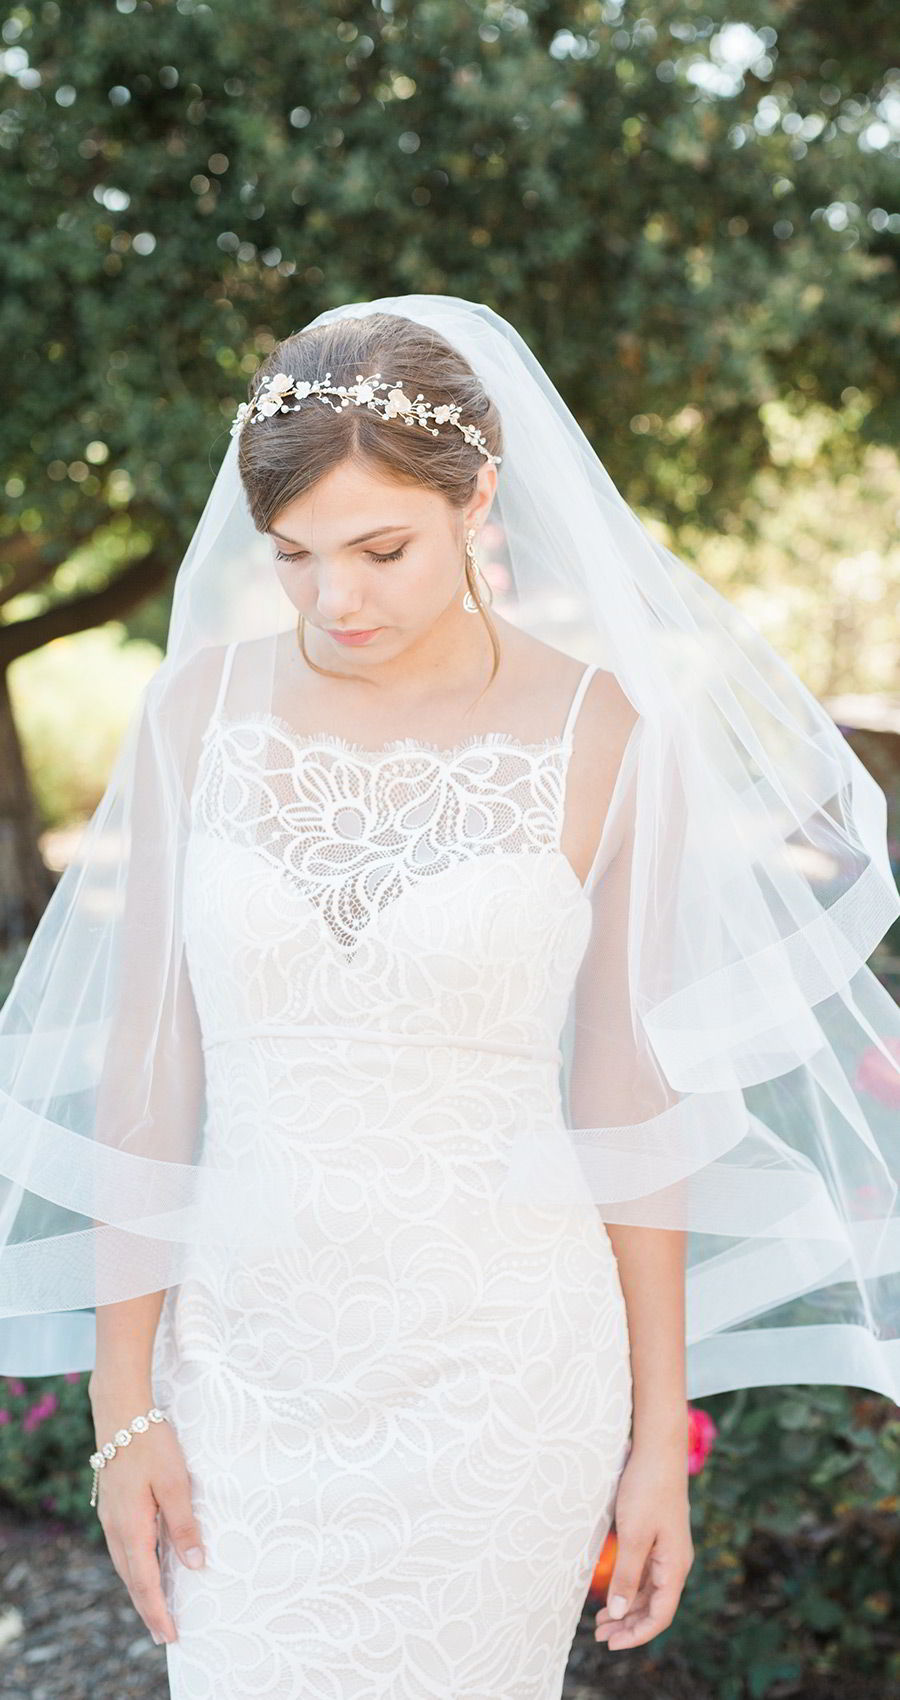 bel aire bridal accessories 6740 rhinestone crystal tie headpiece romantic wedding dress veil